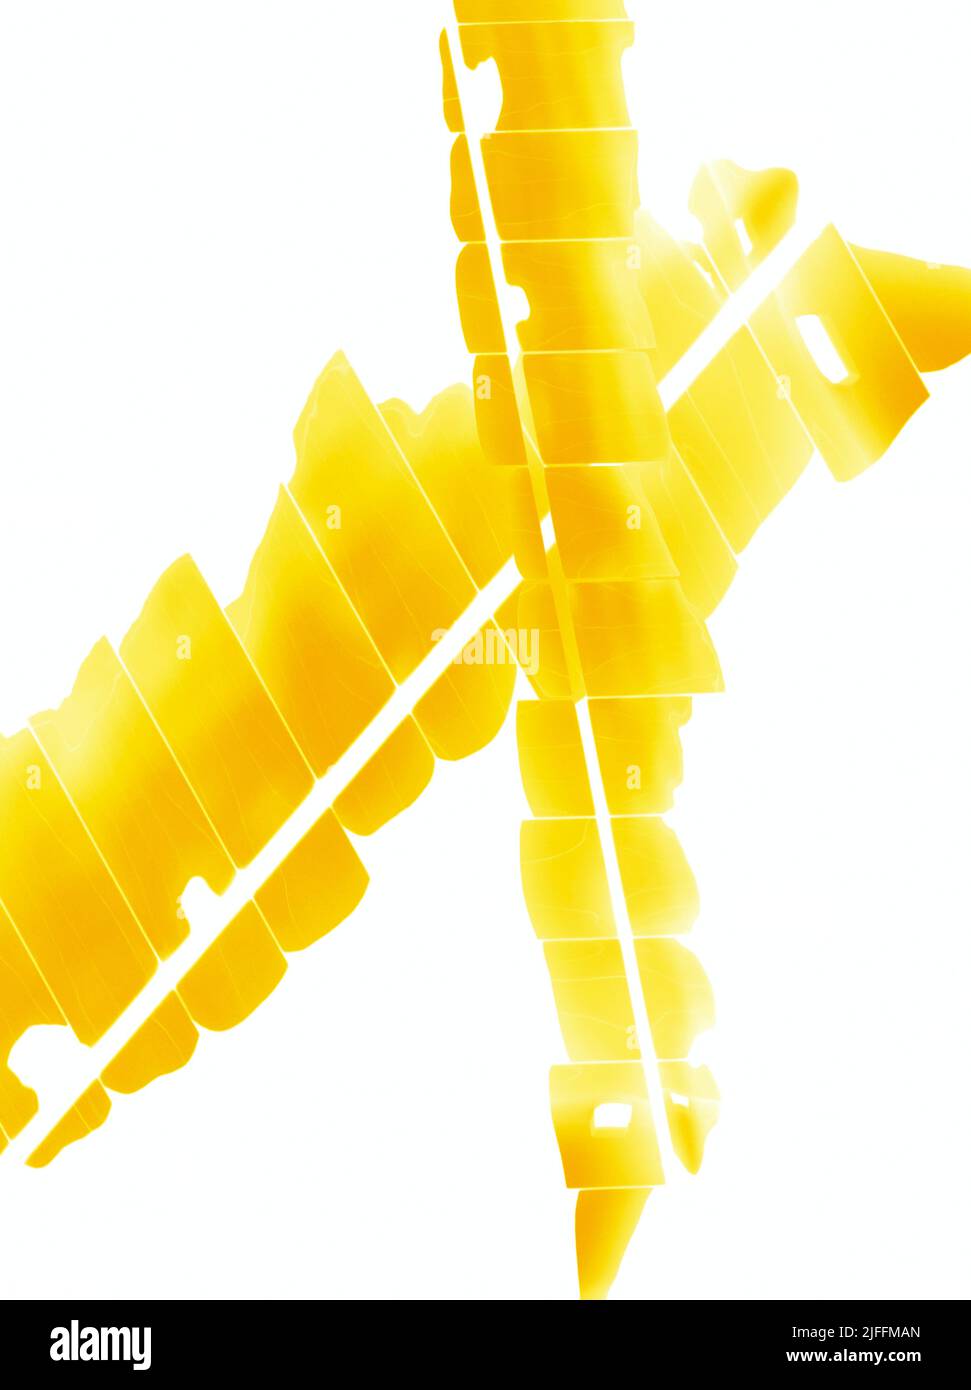 Glowing yellow amorphous abstract design Stock Photo